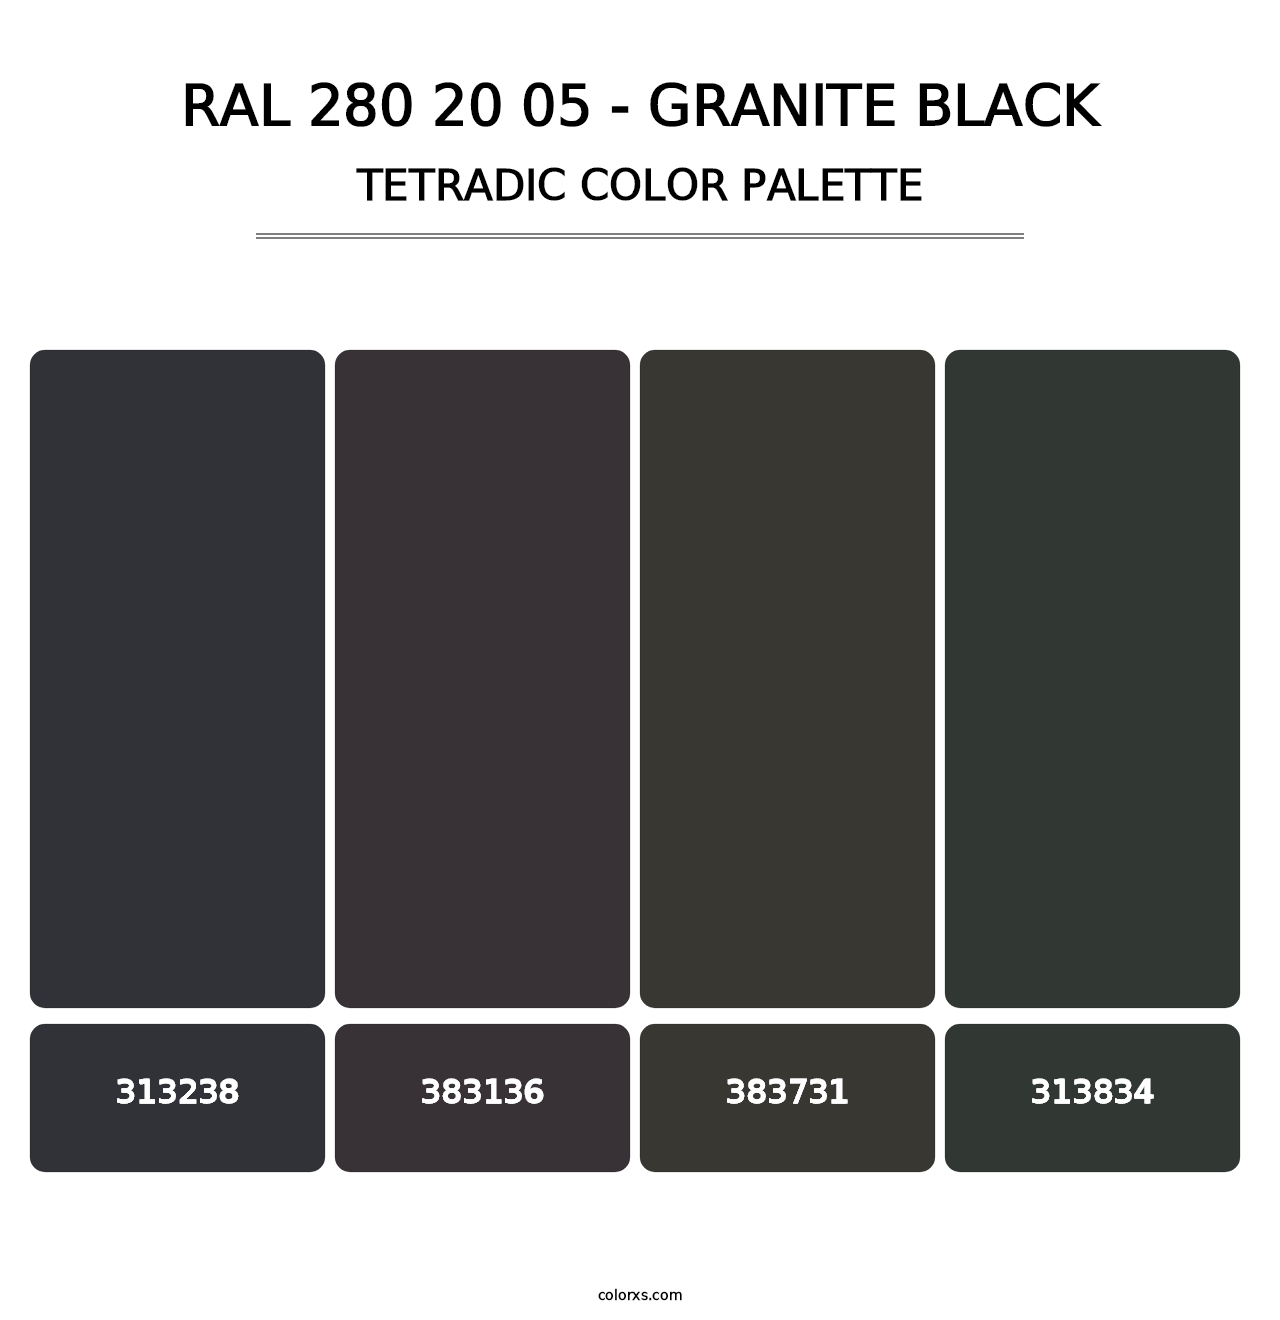 RAL 280 20 05 - Granite Black - Tetradic Color Palette